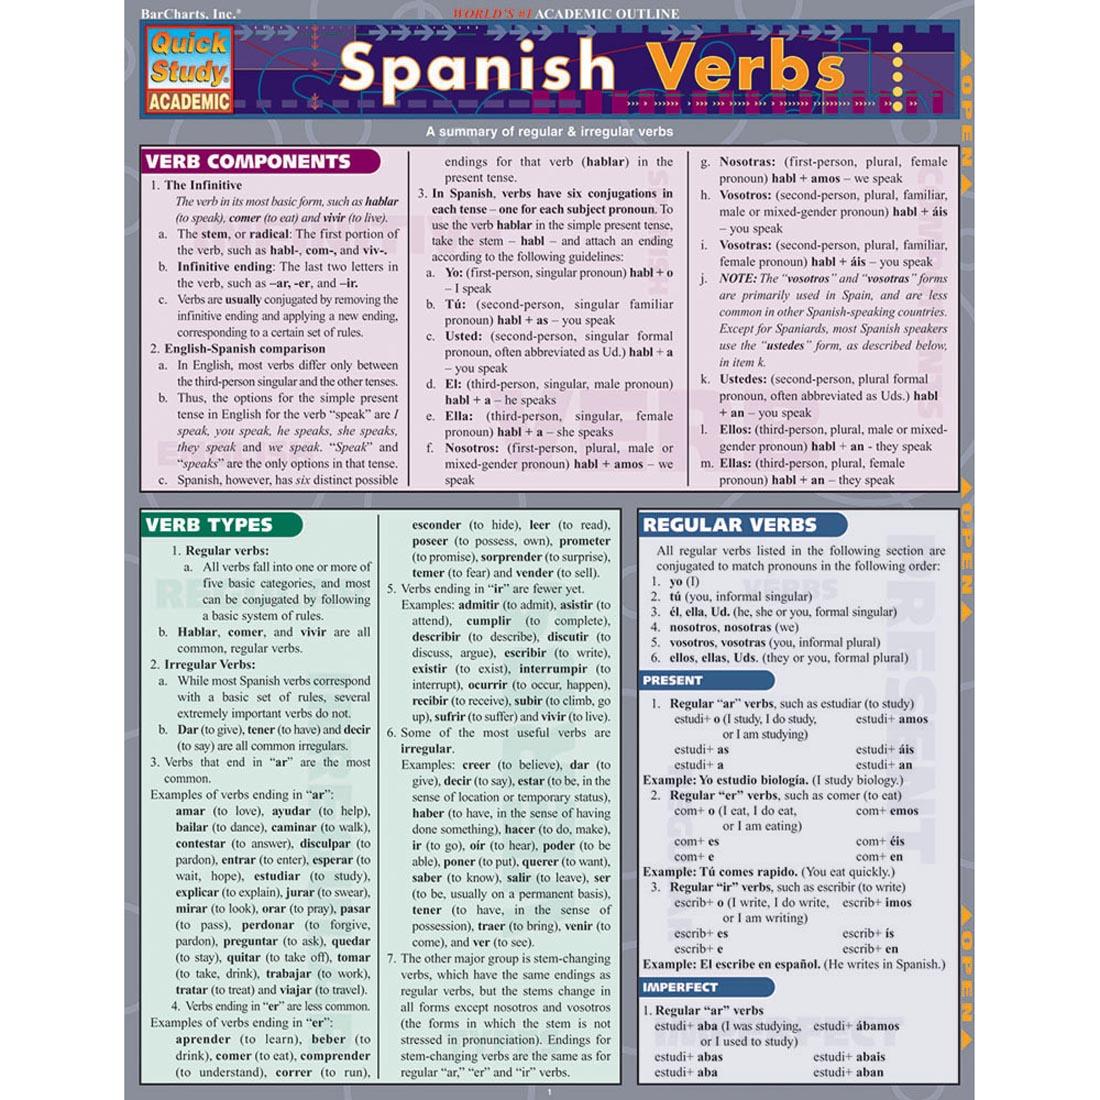 Spanish Verbs Study Guide